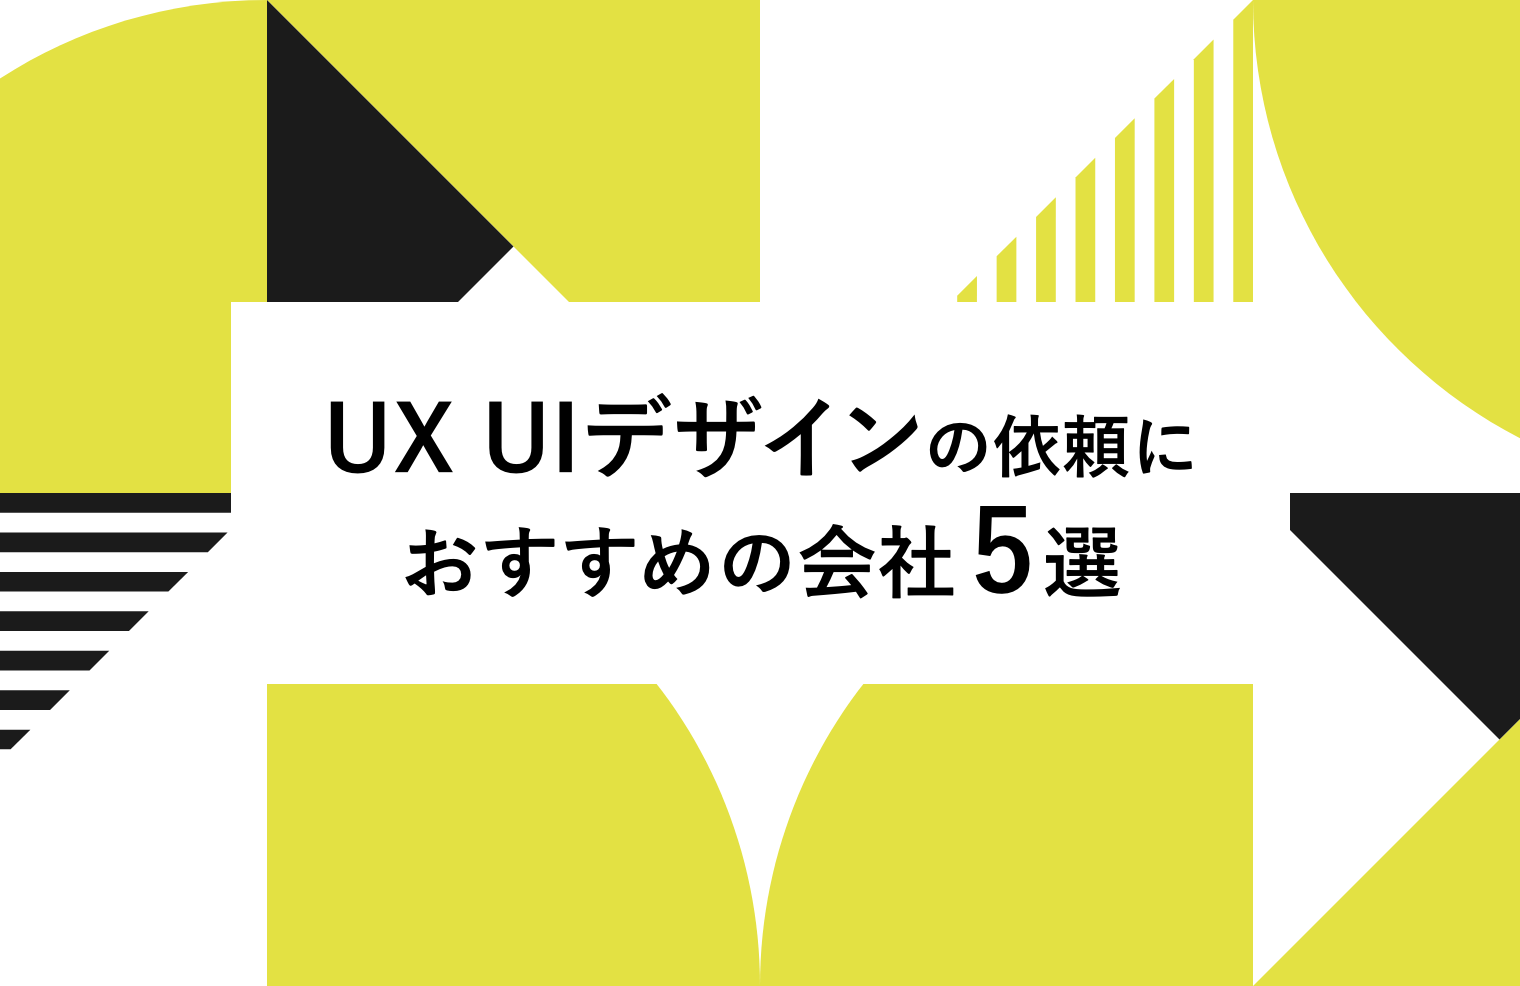 UX UIデザインの依頼におすすめの会社5選！各社の特徴や実績、依頼するときのポイントもご紹介